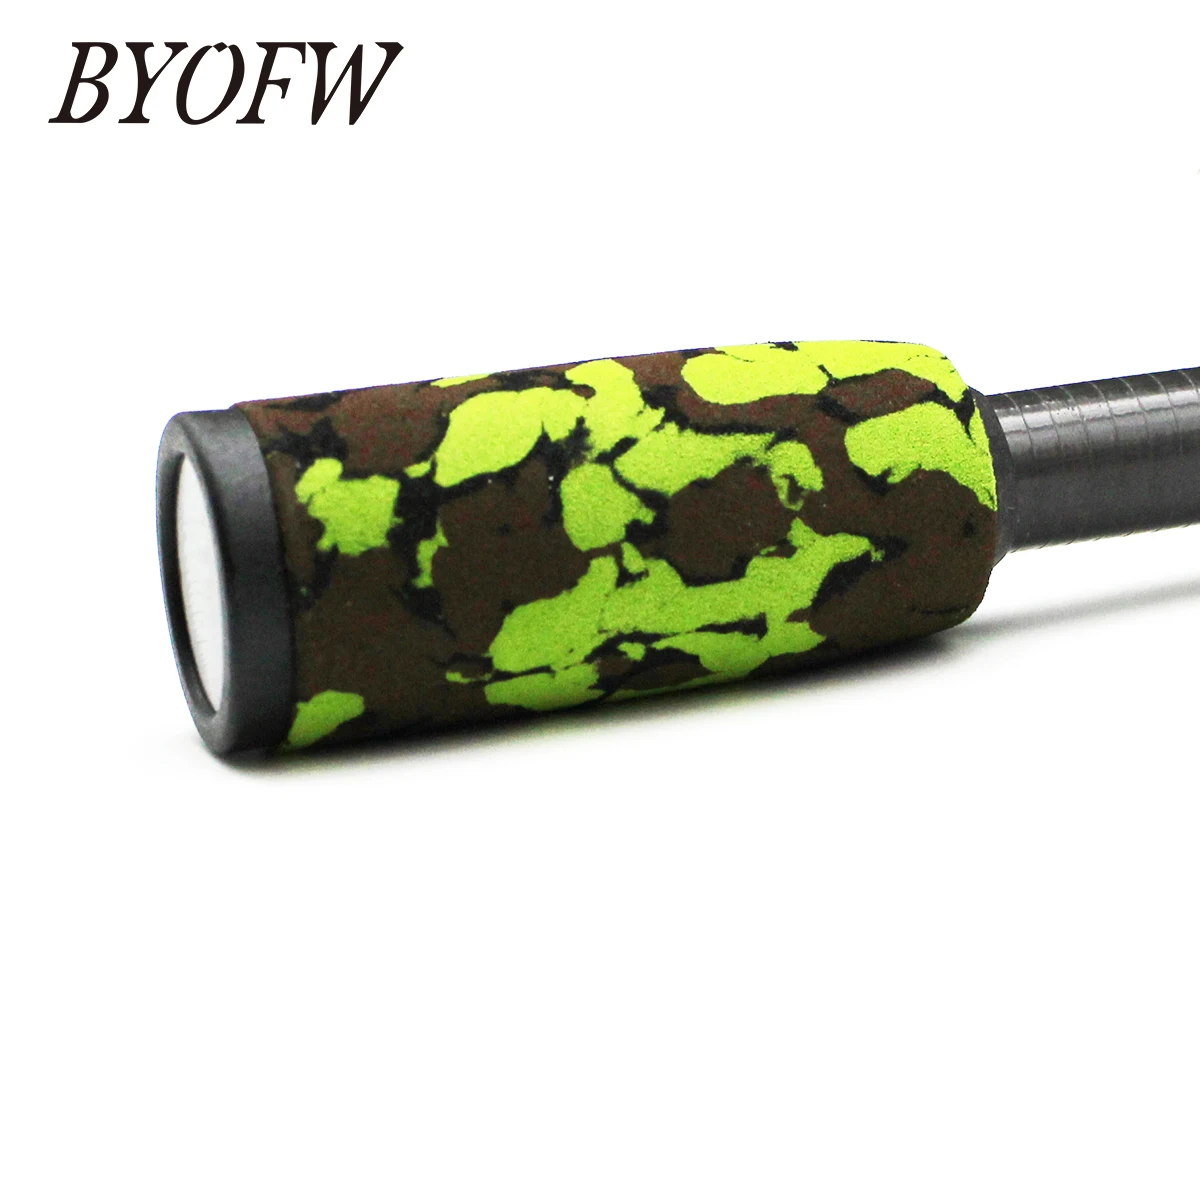 https://ae01.alicdn.com/kf/S236c886b6b11404499fa7109249d8e37t/BYOFW-1-Piece-Black-EVA-Foam-Fishing-Rod-Butt-Handle-Grip-With-Aluminum-And-PVC-Decorative.jpg